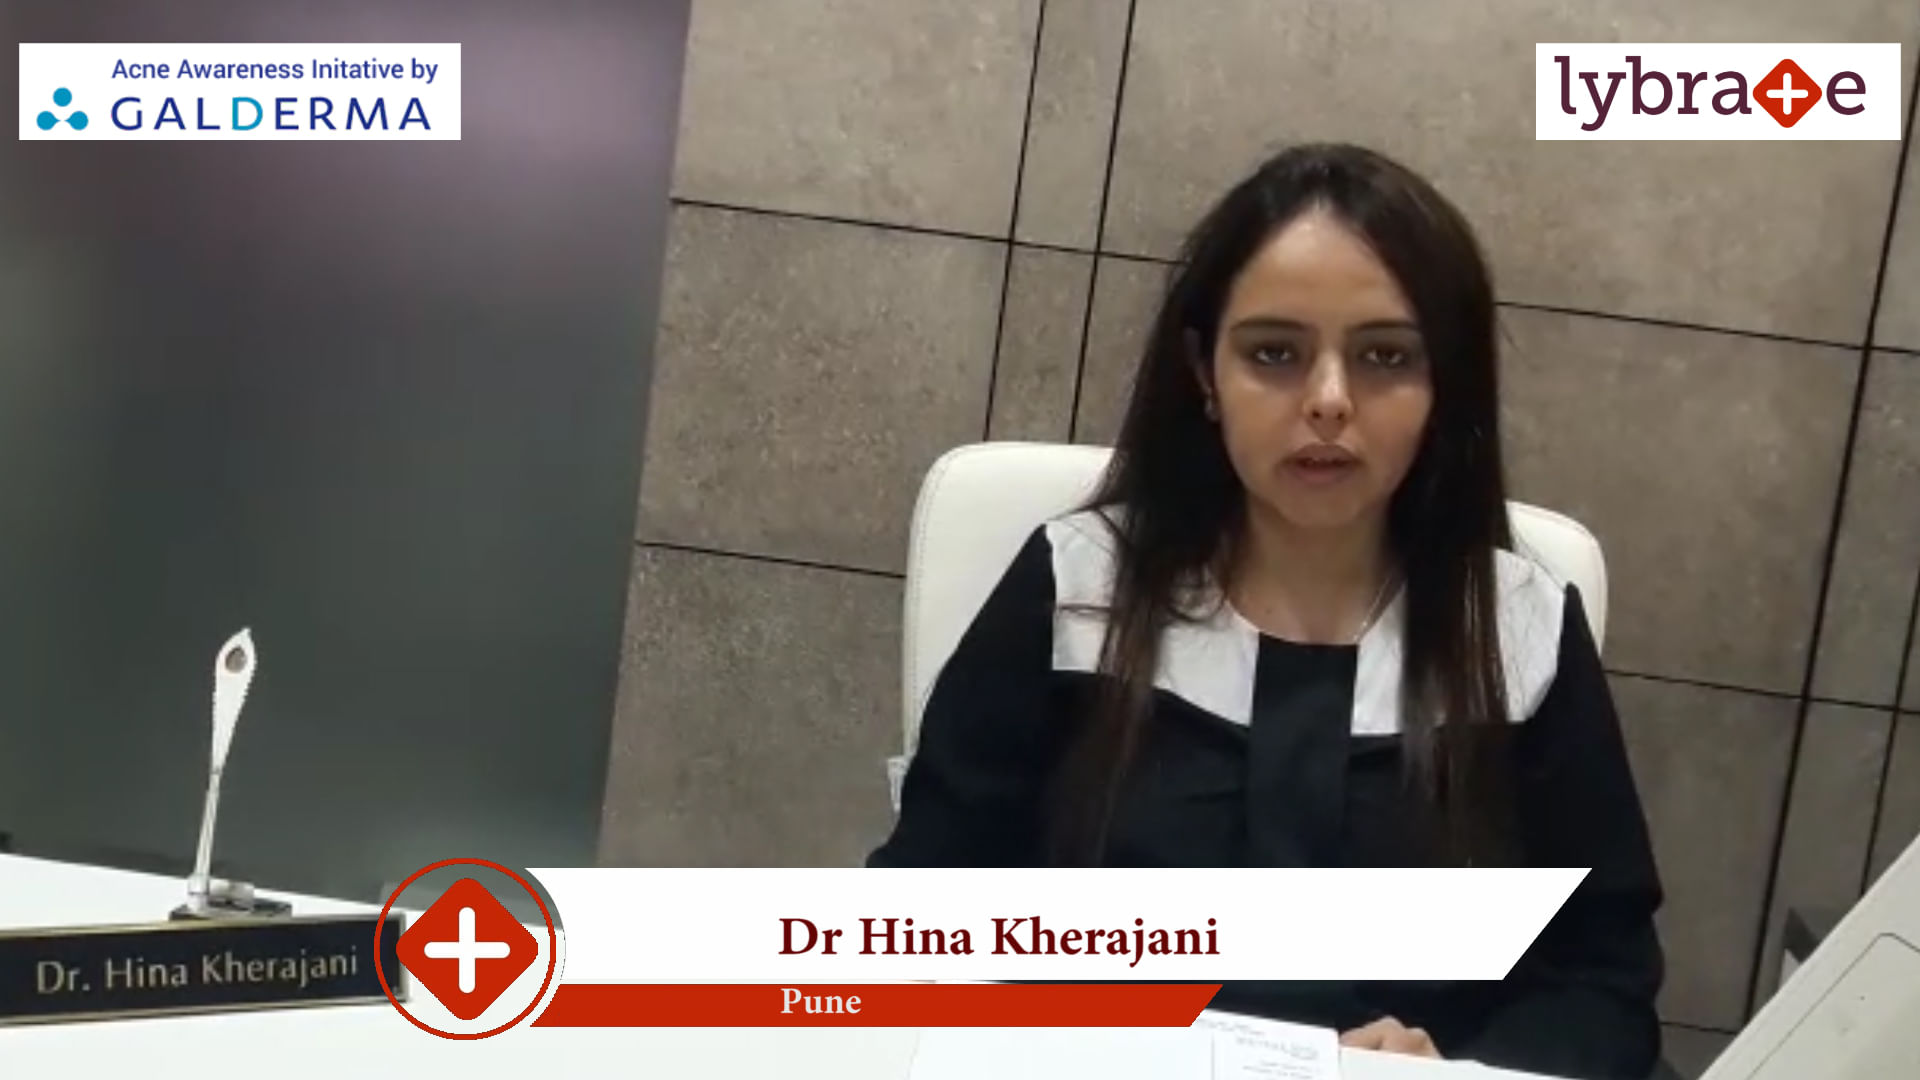 Lybrate | Dr. Hina Kherajani speaks on IMPORTANCE OF TREATING ACNE EARLY